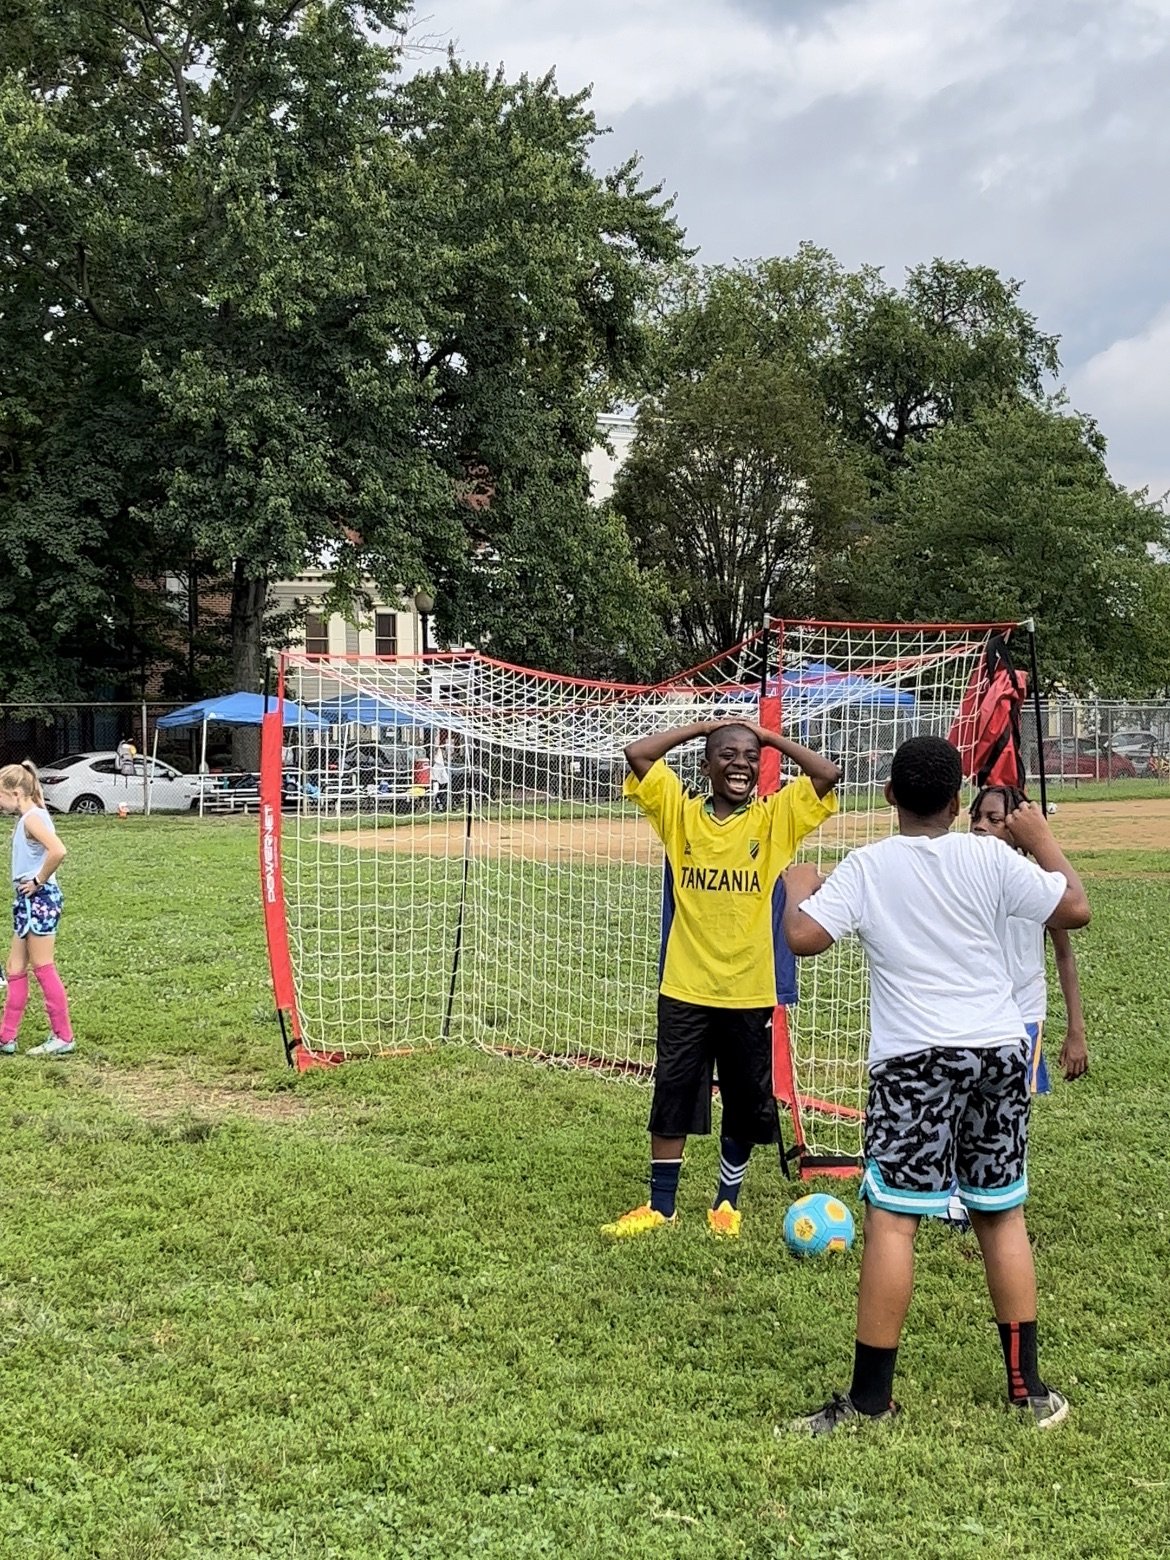 Dc-way-soccer-club-for-kids-in-washington-dc-summer-camp-at-tyler-elementary-school- 8403.jpeg